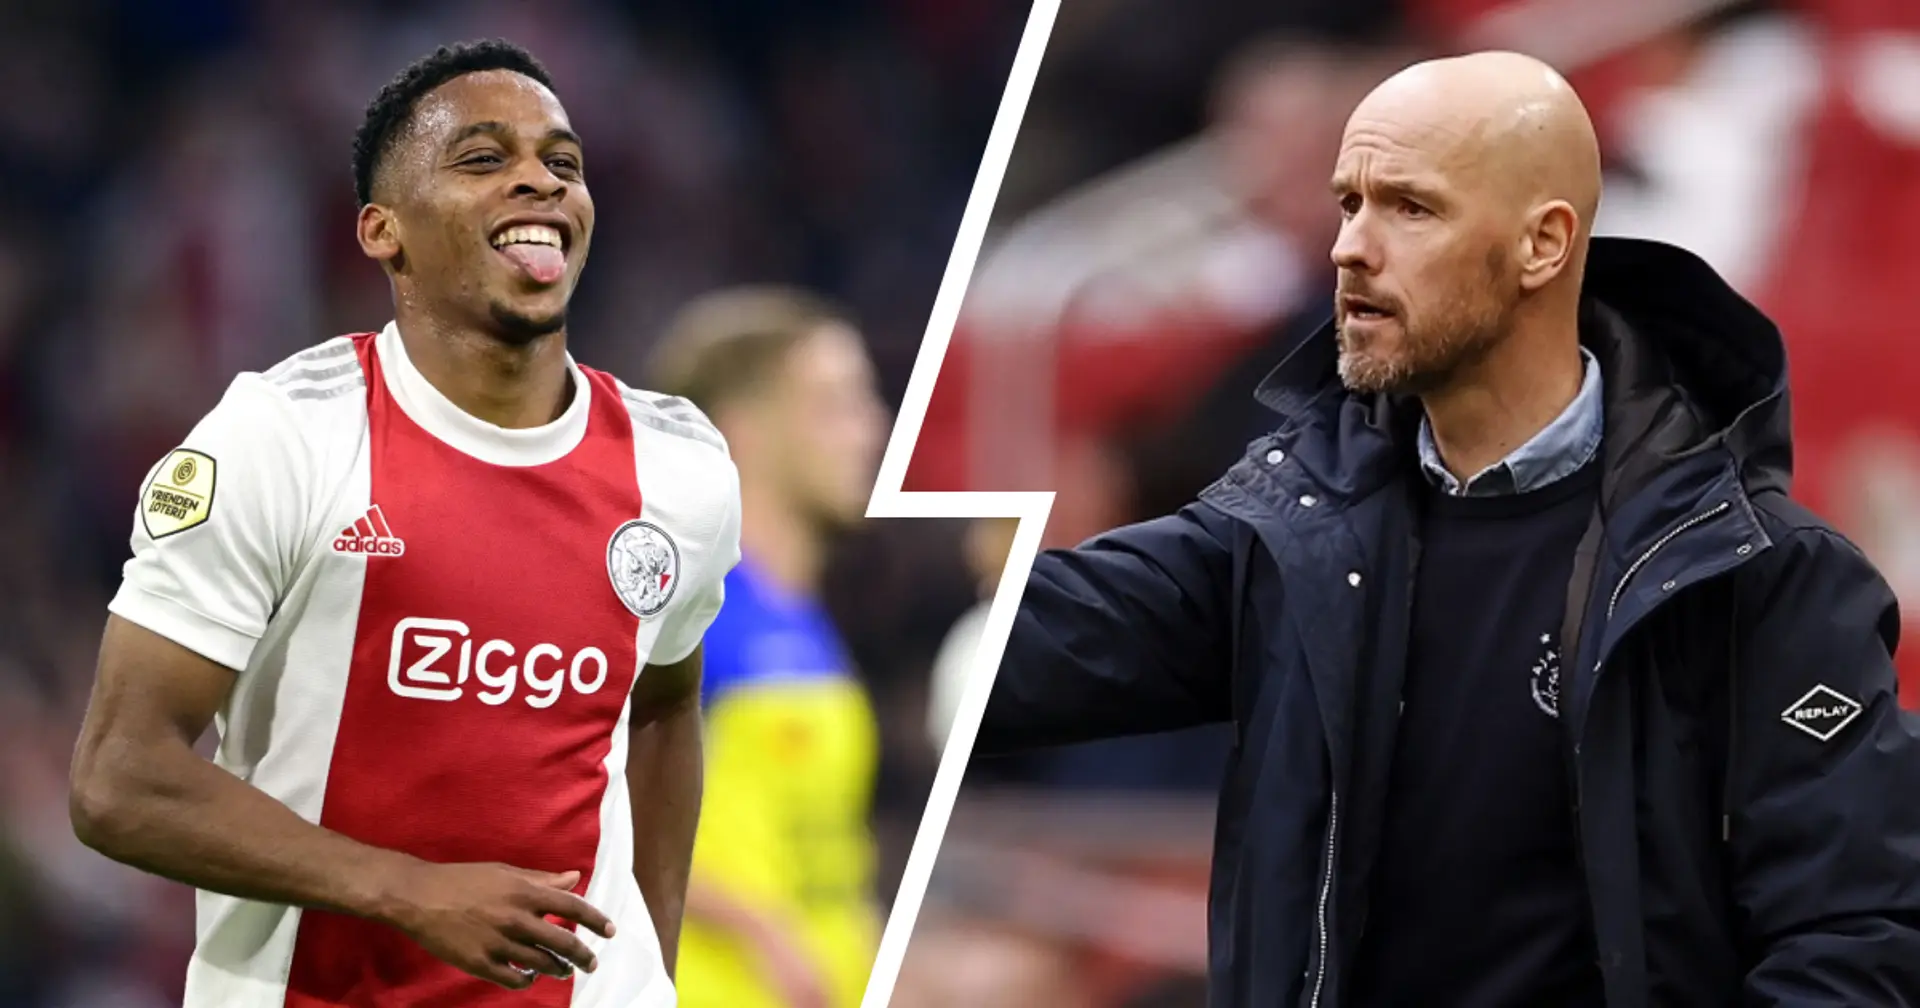 De Telegraaf: Ajax have 'high hopes' of keeping Jurrien Timber this summer (reliability: 4 stars)